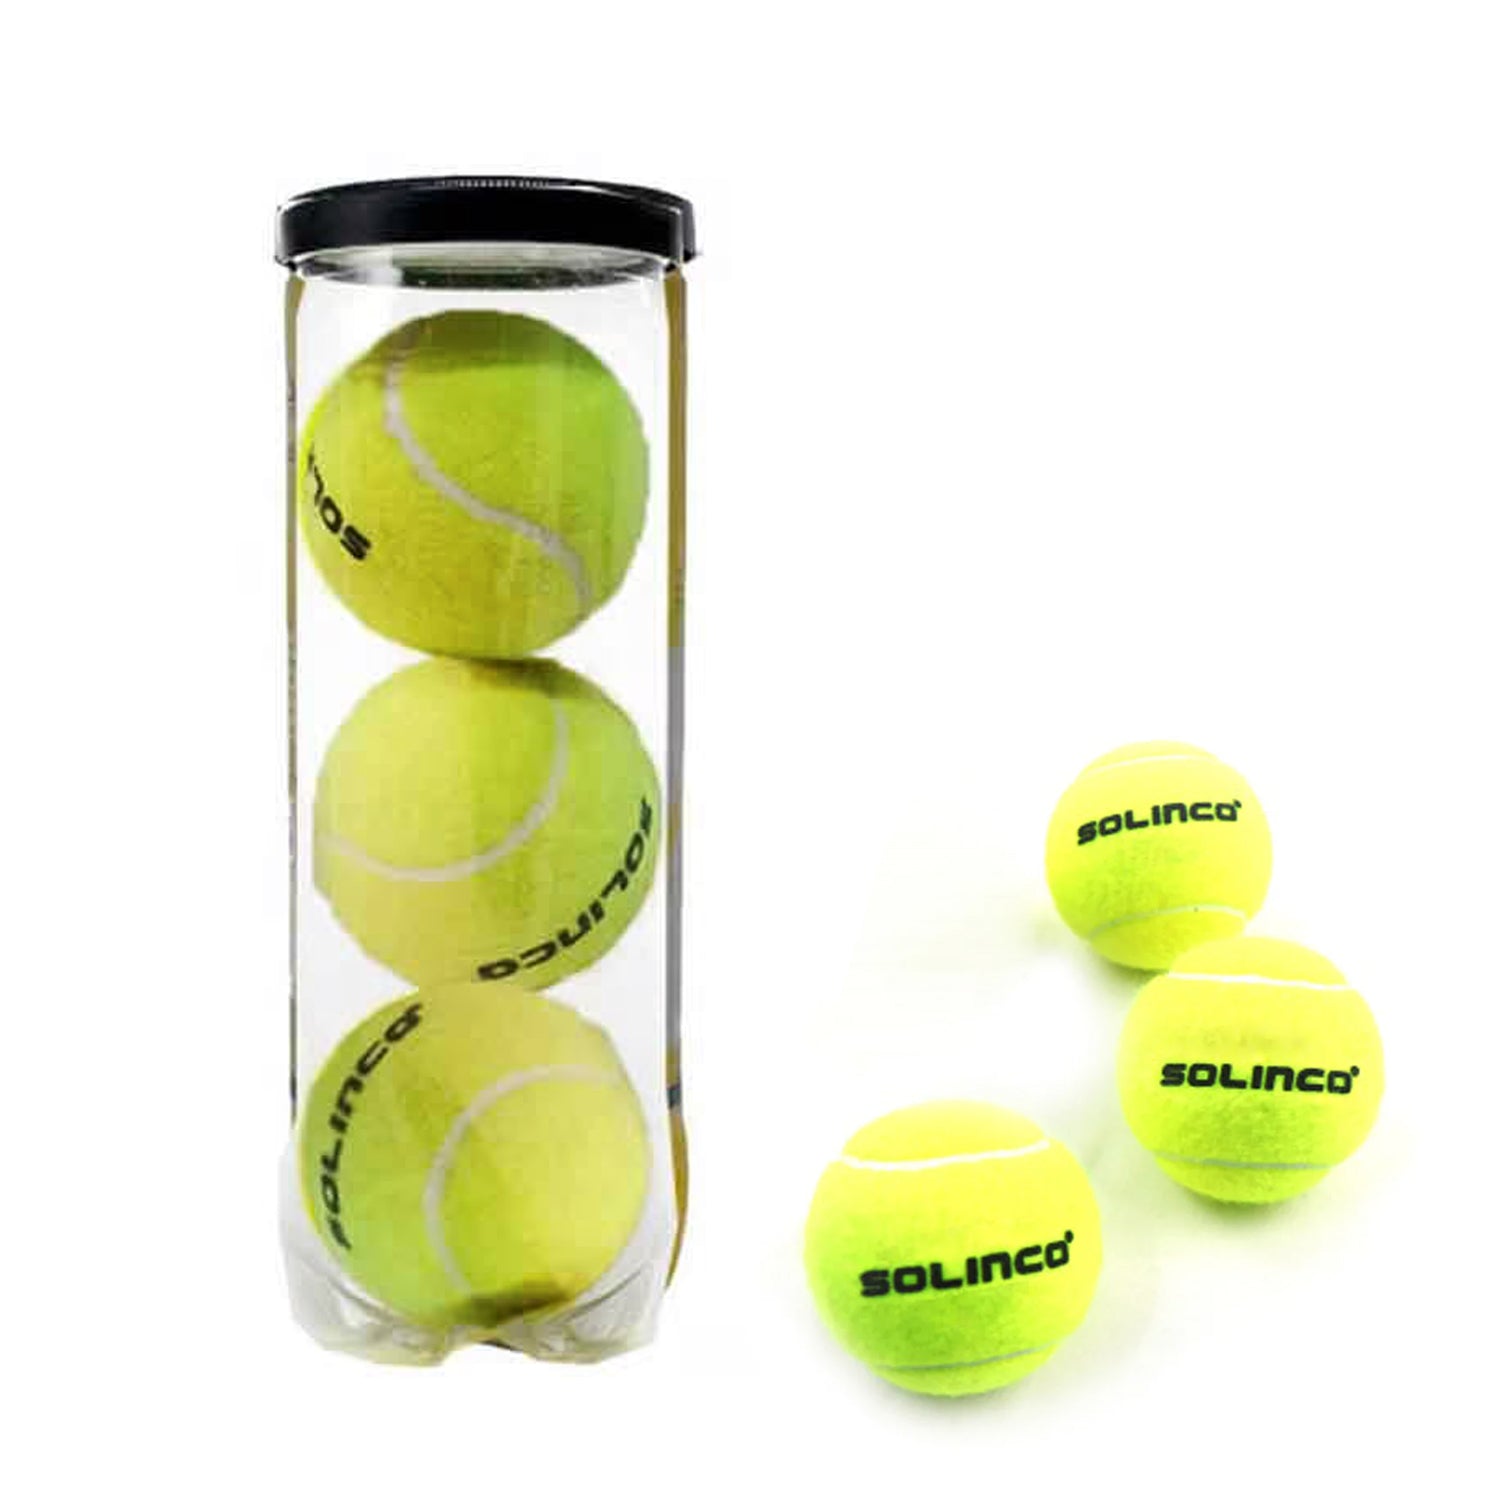 Solinco Pro Performance Tennis Ball, Yellow